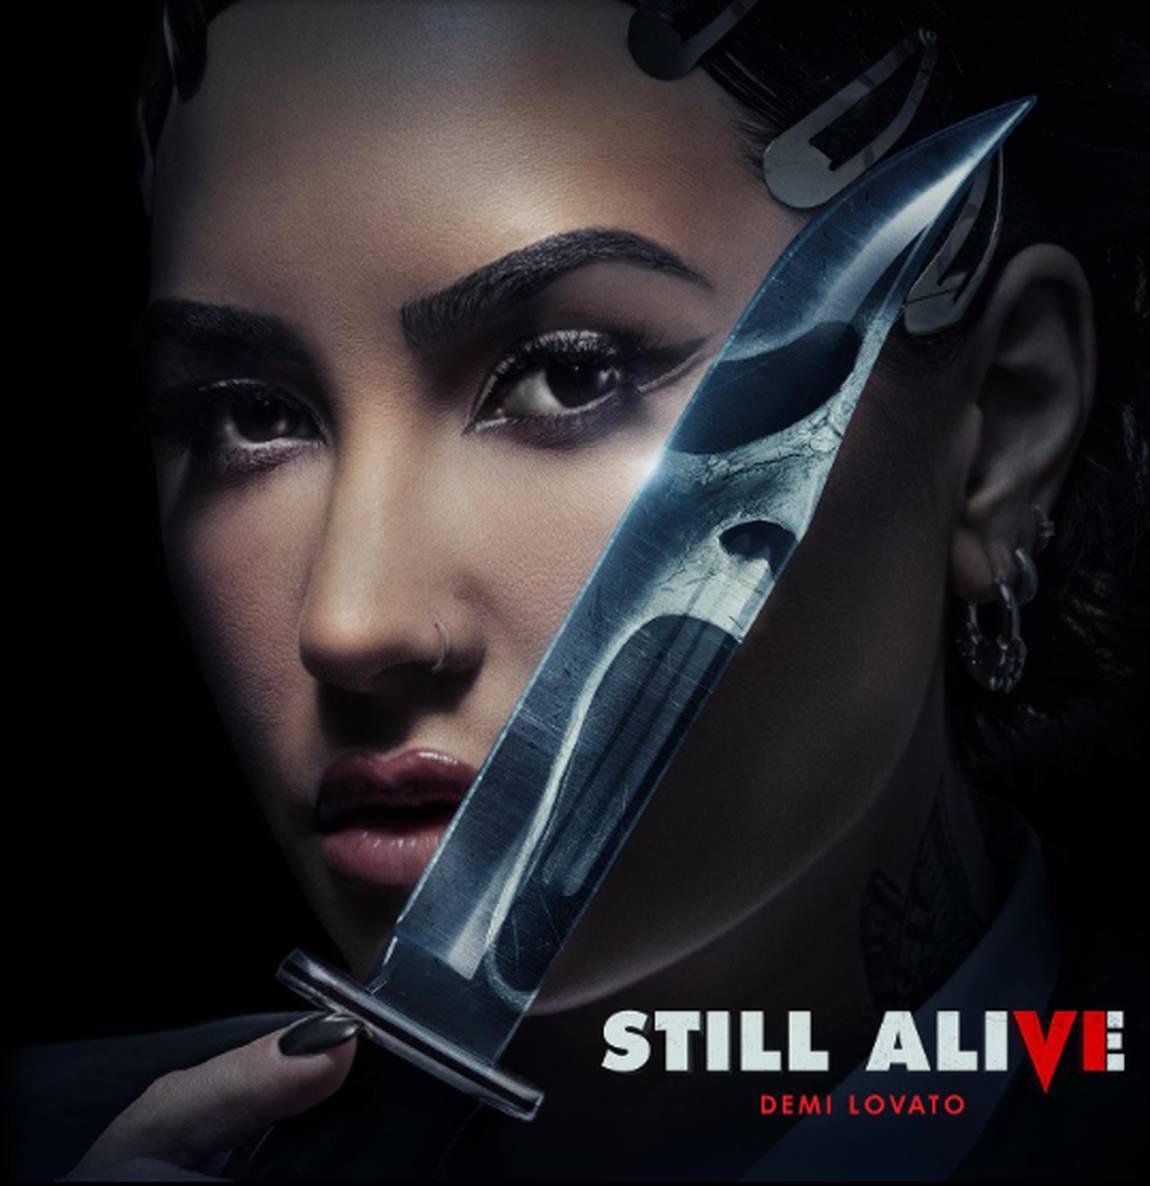 Foto da cantora Demi Lovato. Nela, ela está segurando uma faca e sua unha está pintada de preto.